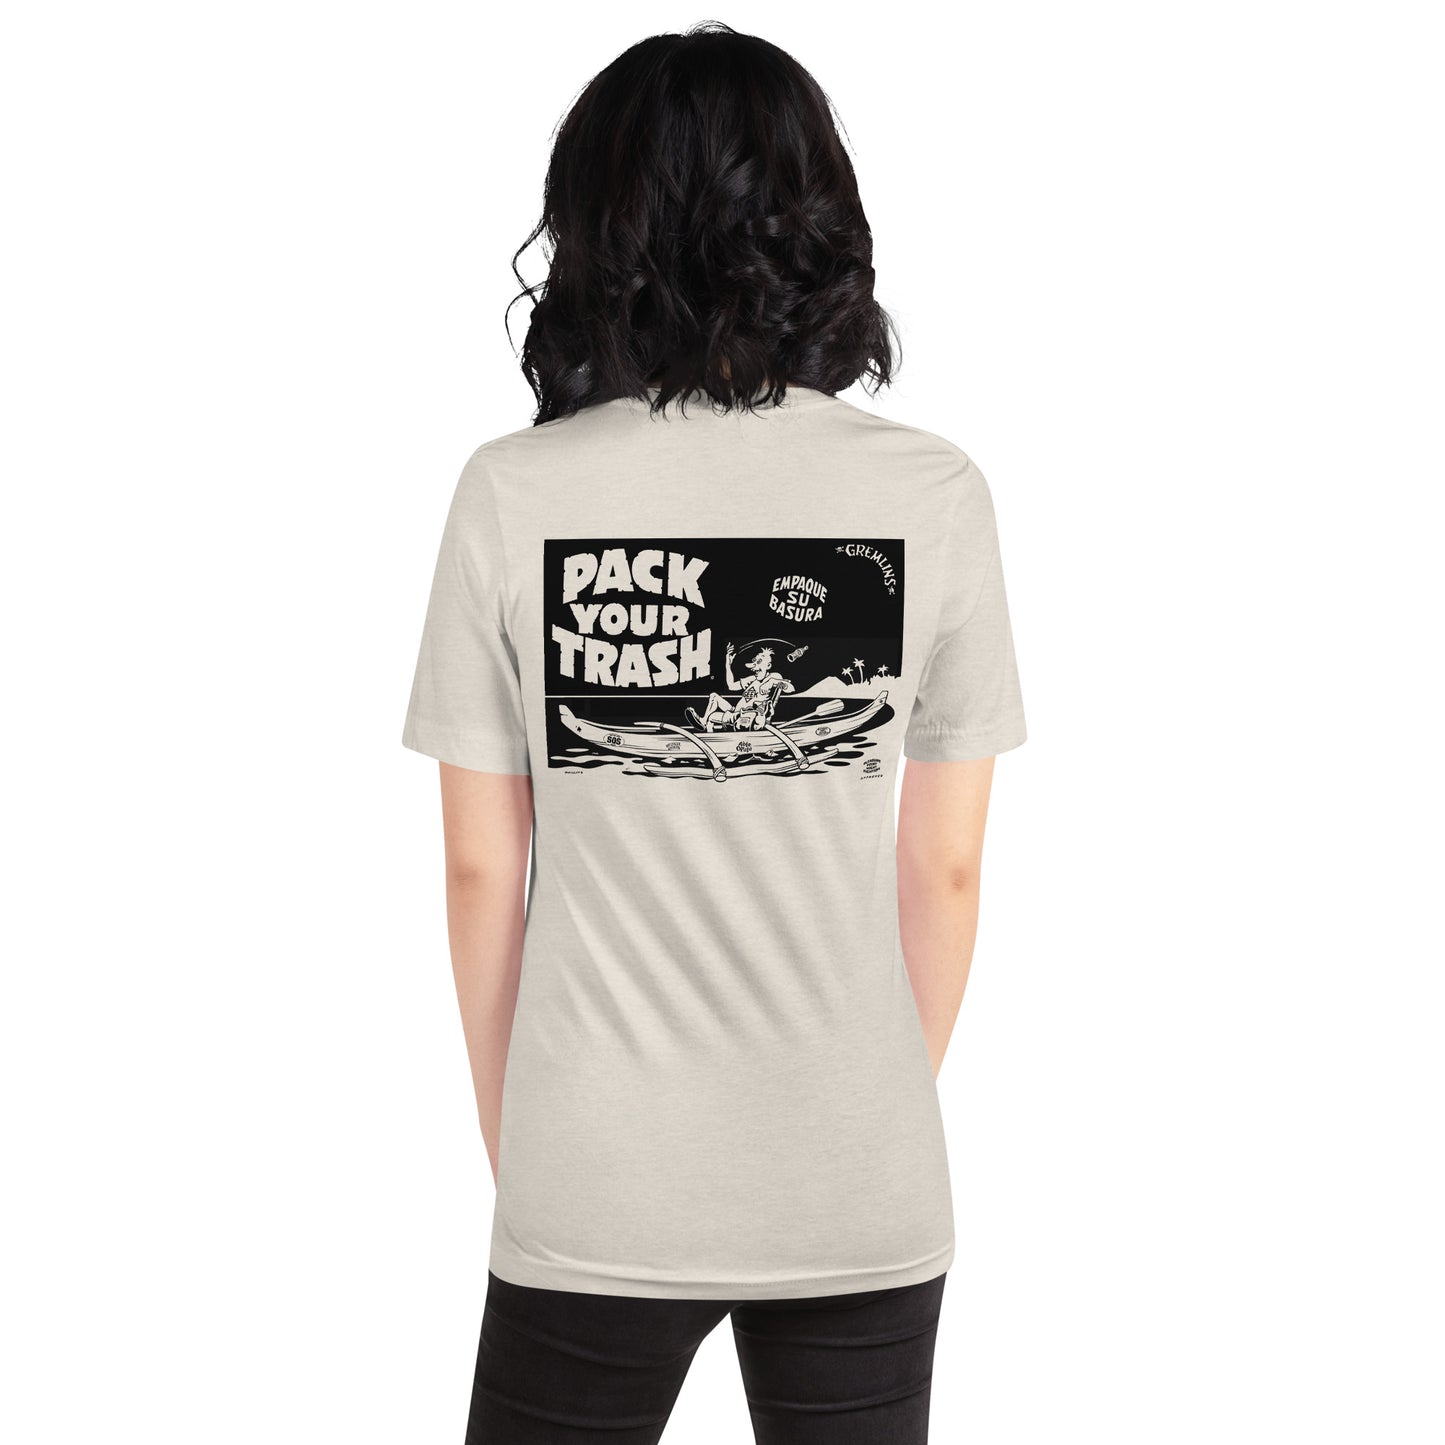 Pack Your Trash - Canoe geek - Unisex t-shirt